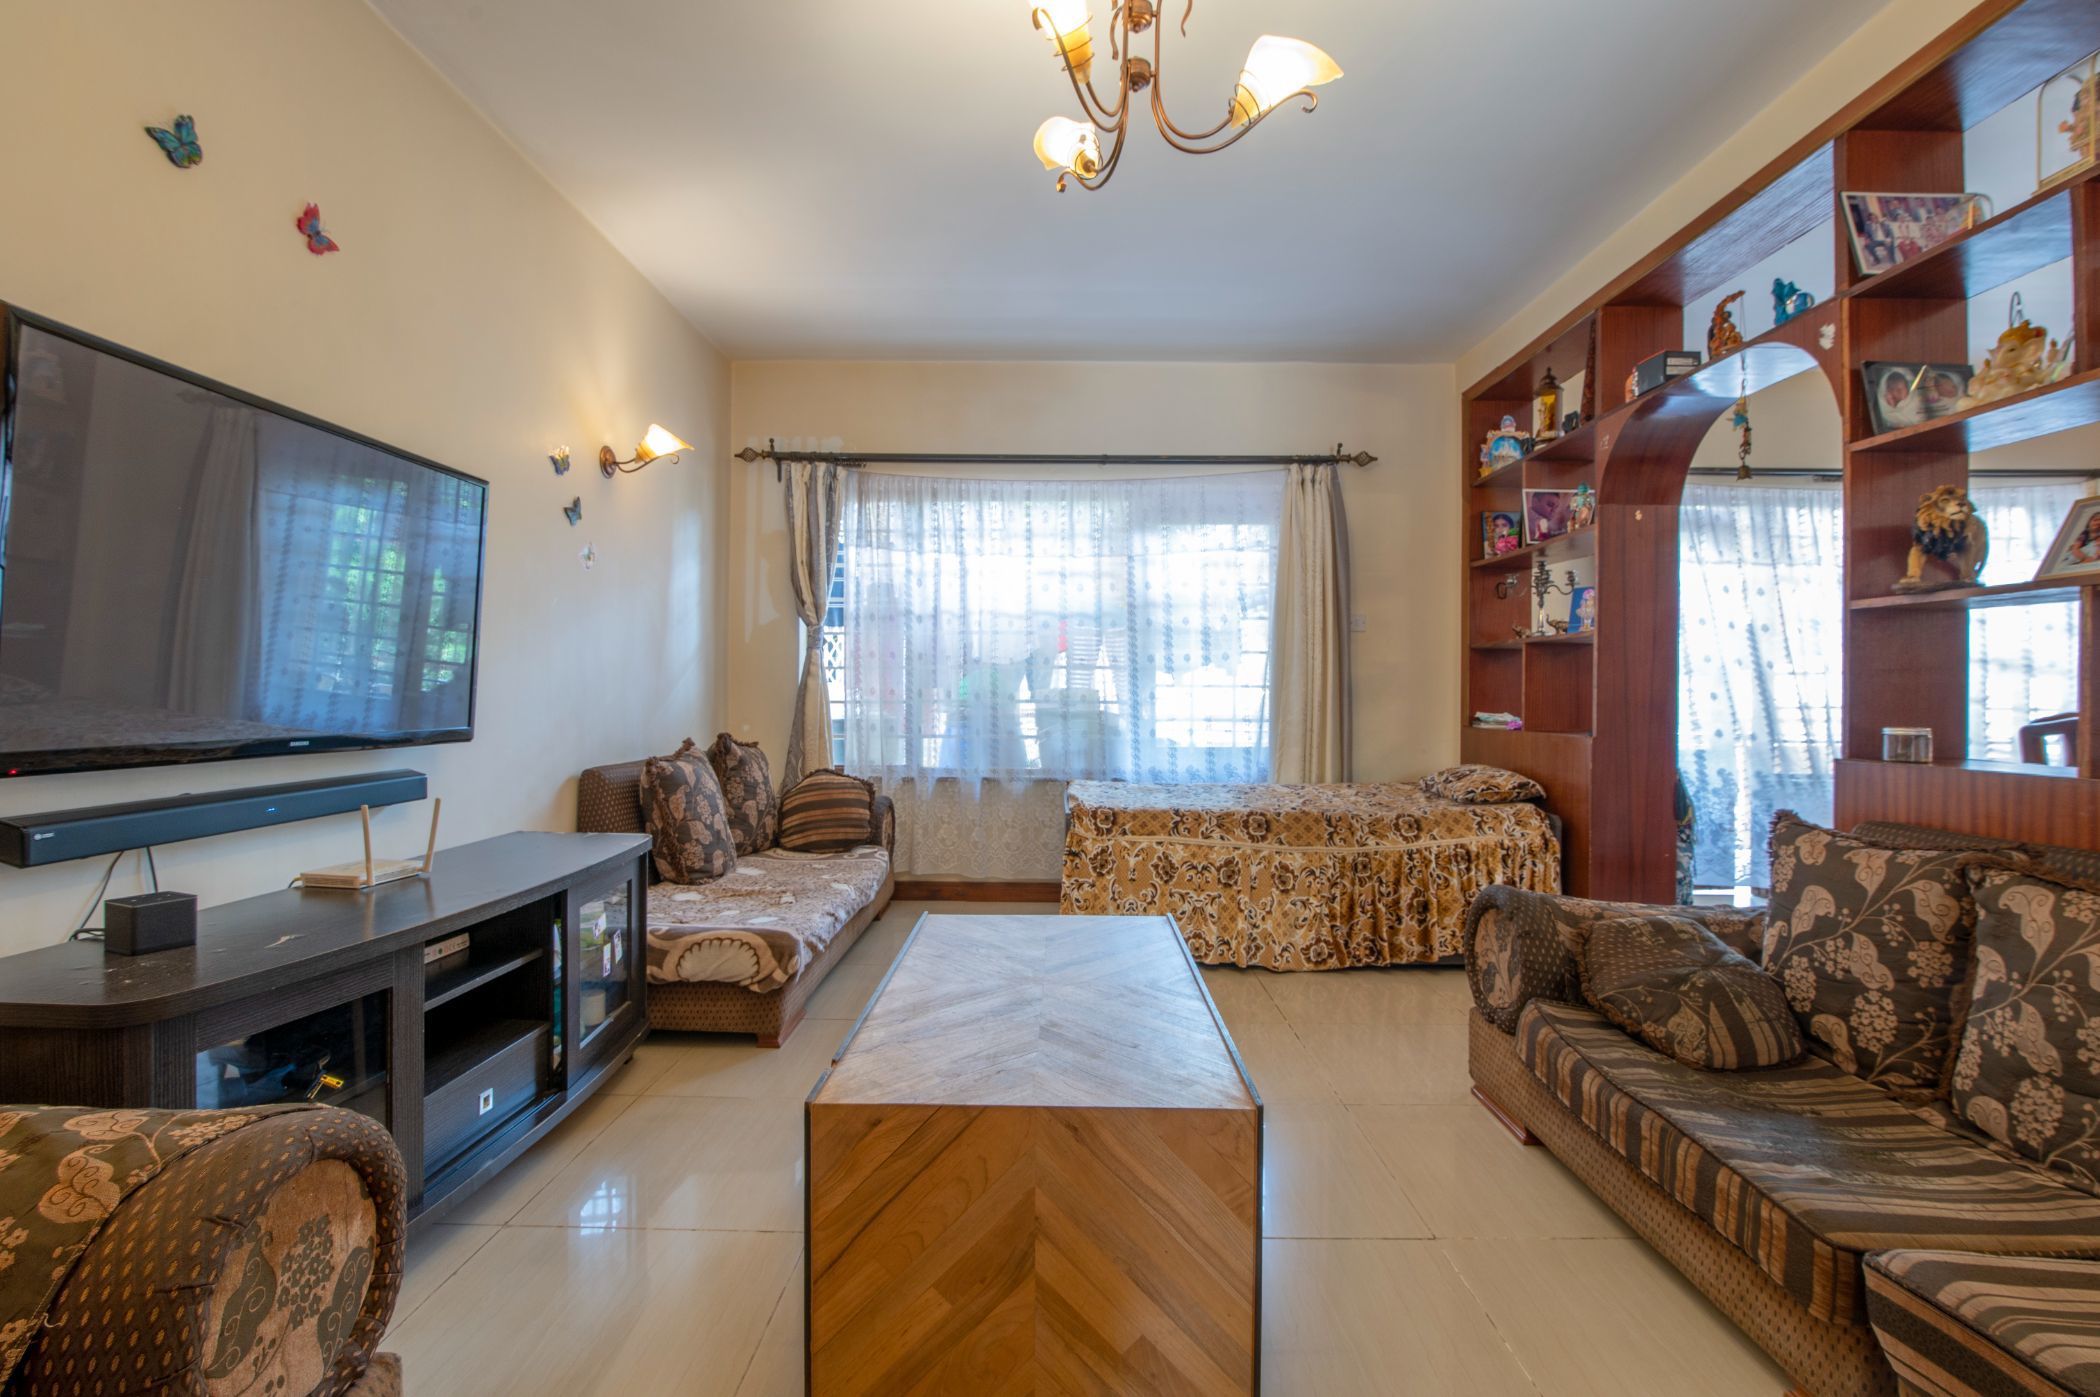 3 bedroom apartment for sale in Westlands (Kenya)